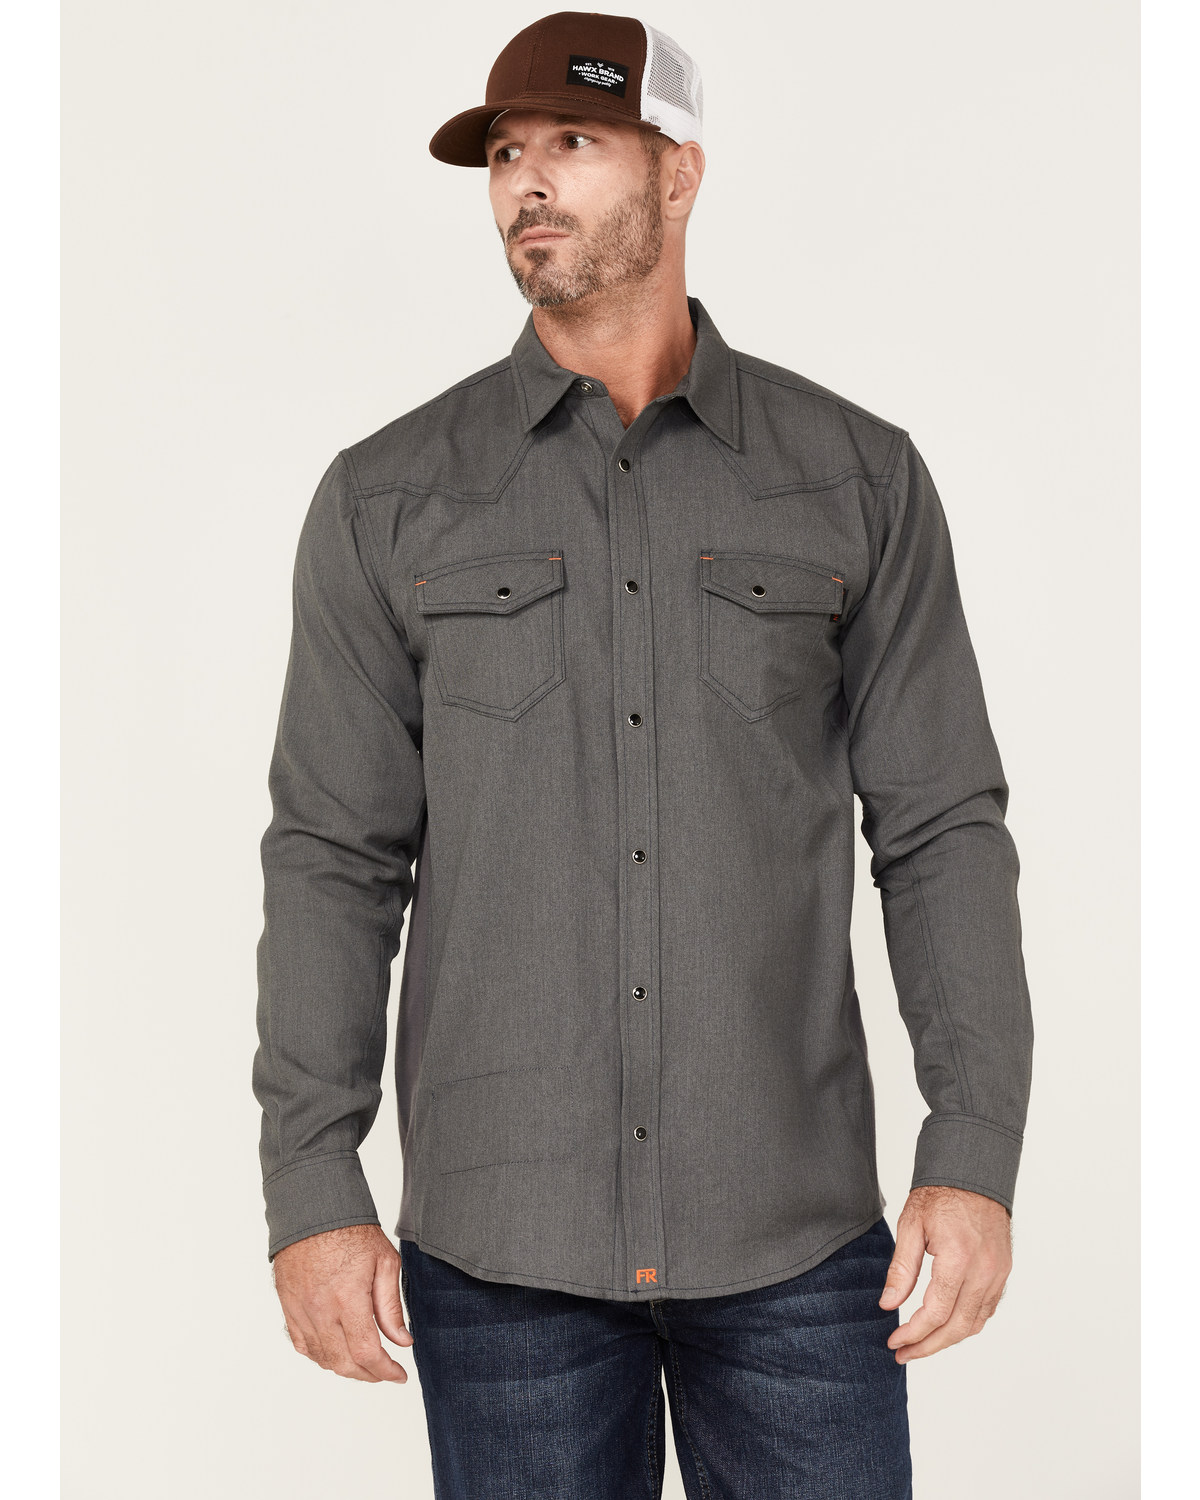 Cody James Men's FR Vented Long Sleeve Button-Down Work Shirt